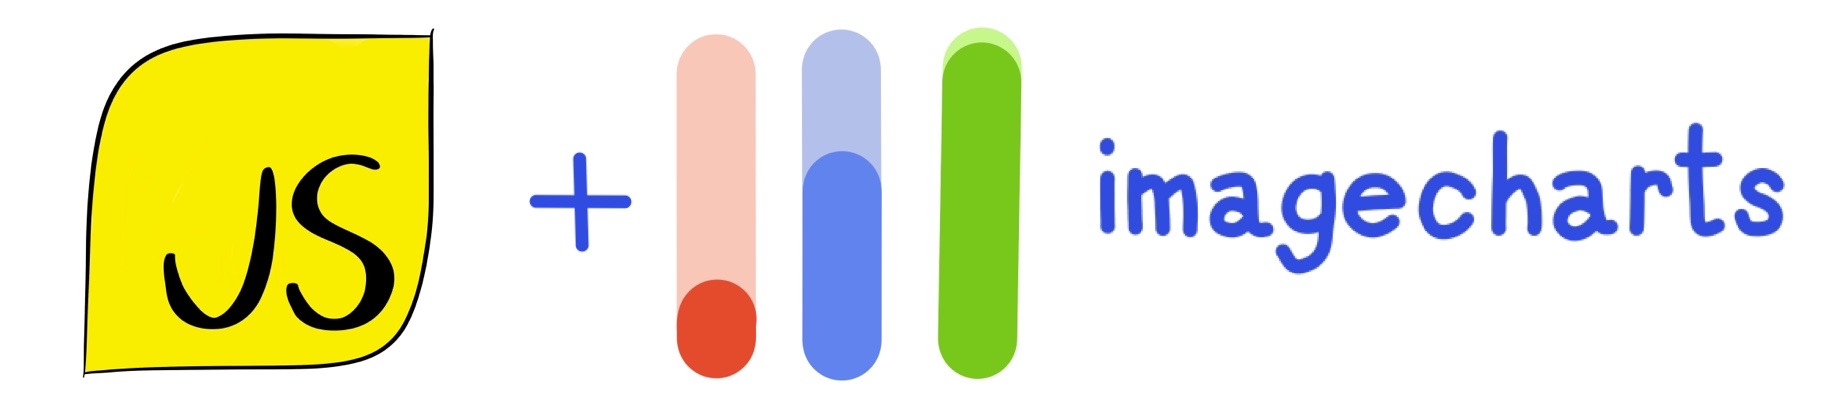 image charts javascript library logo